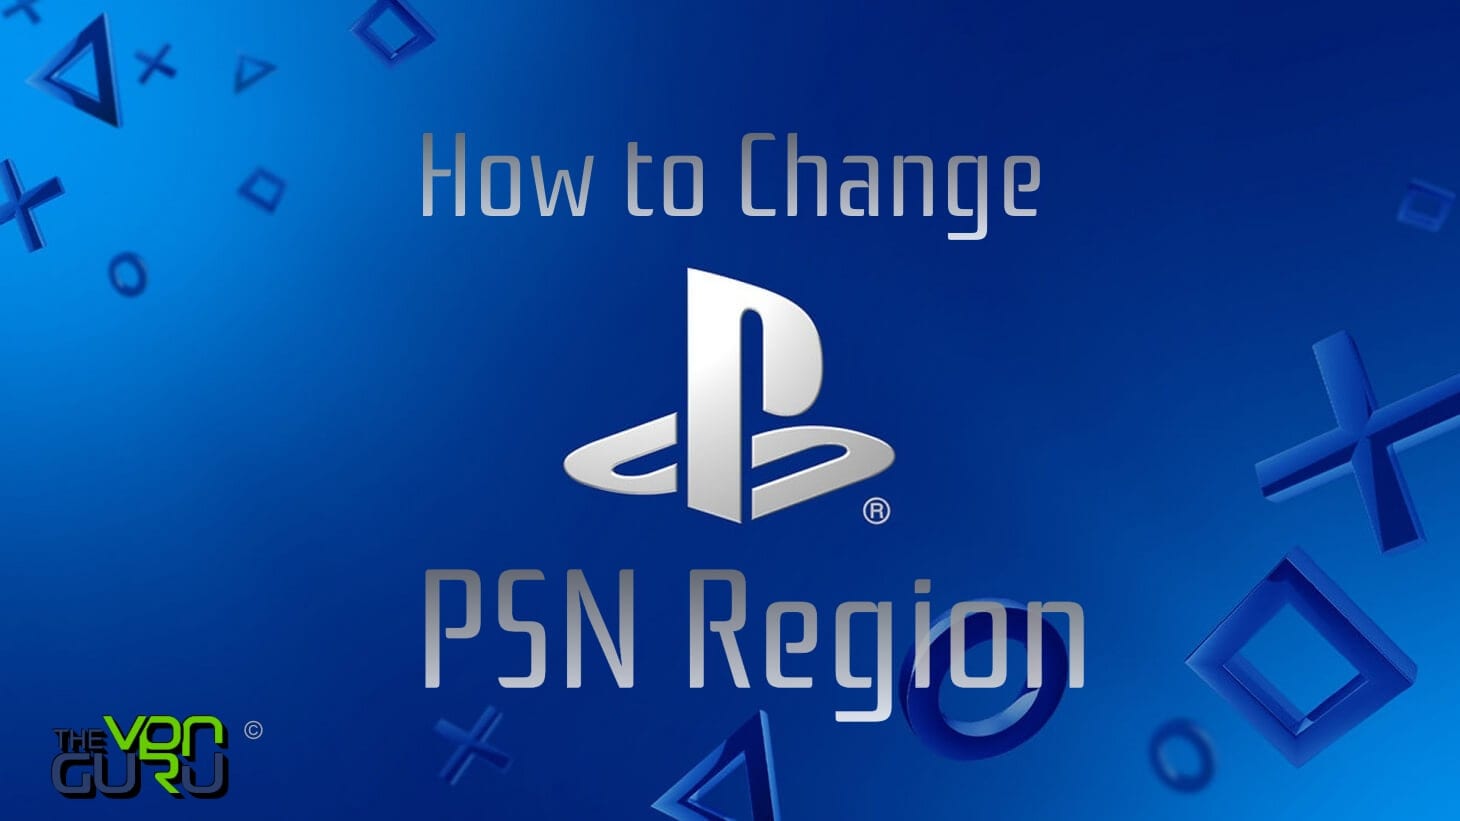 Chinese Playstation4 China cannot login PSN account